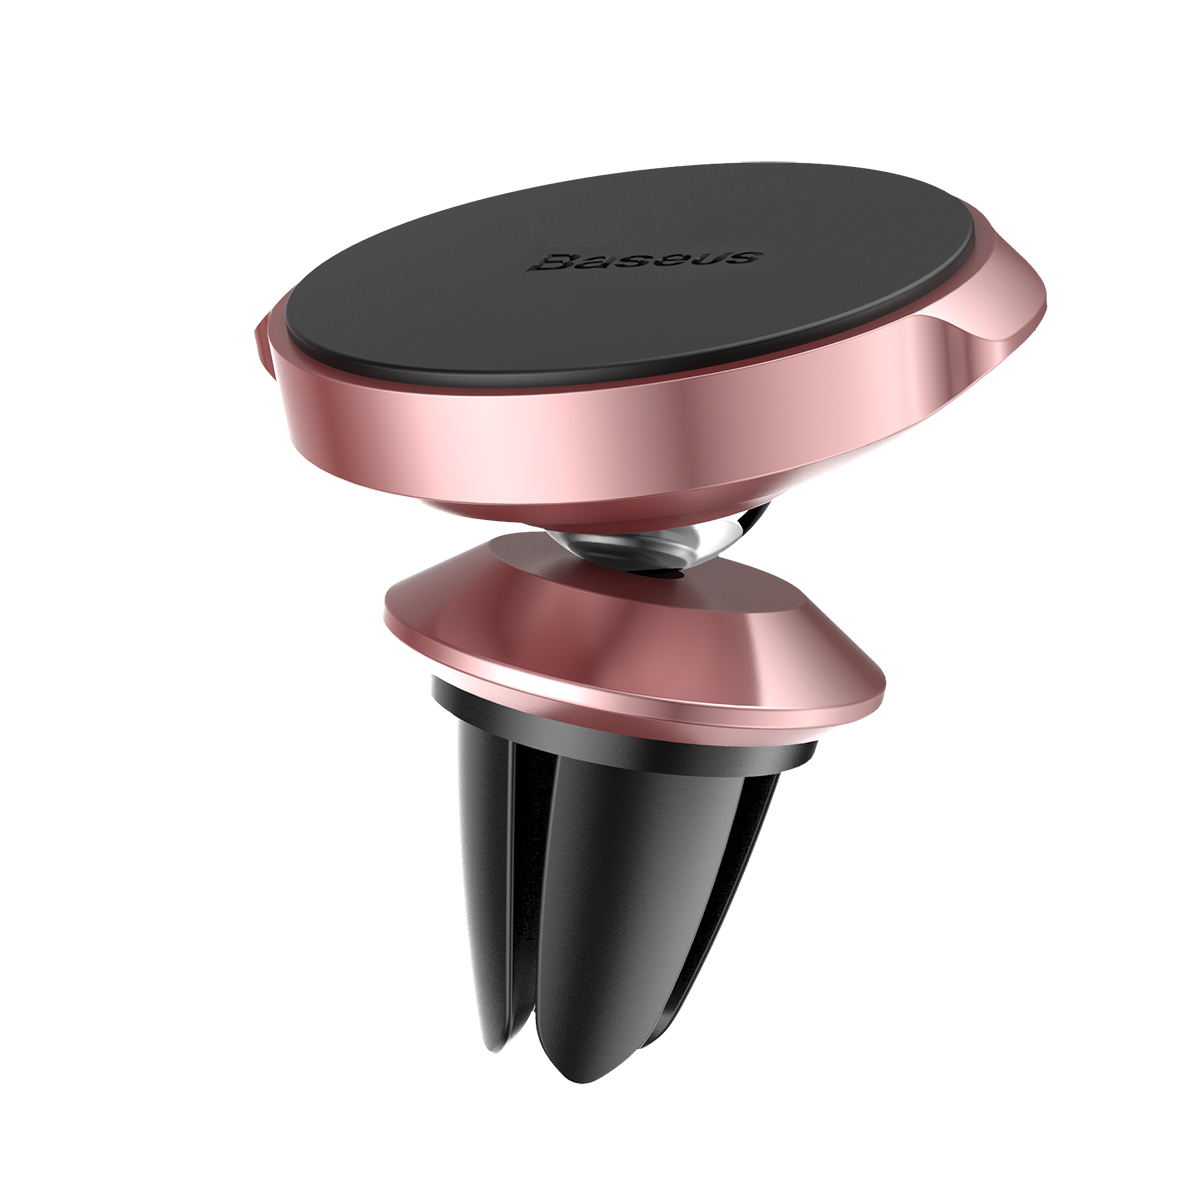 Автодержатель магнитный BASEUS SUER-A0R Small Ears Series (Air outlet type) цвет розовое золото.